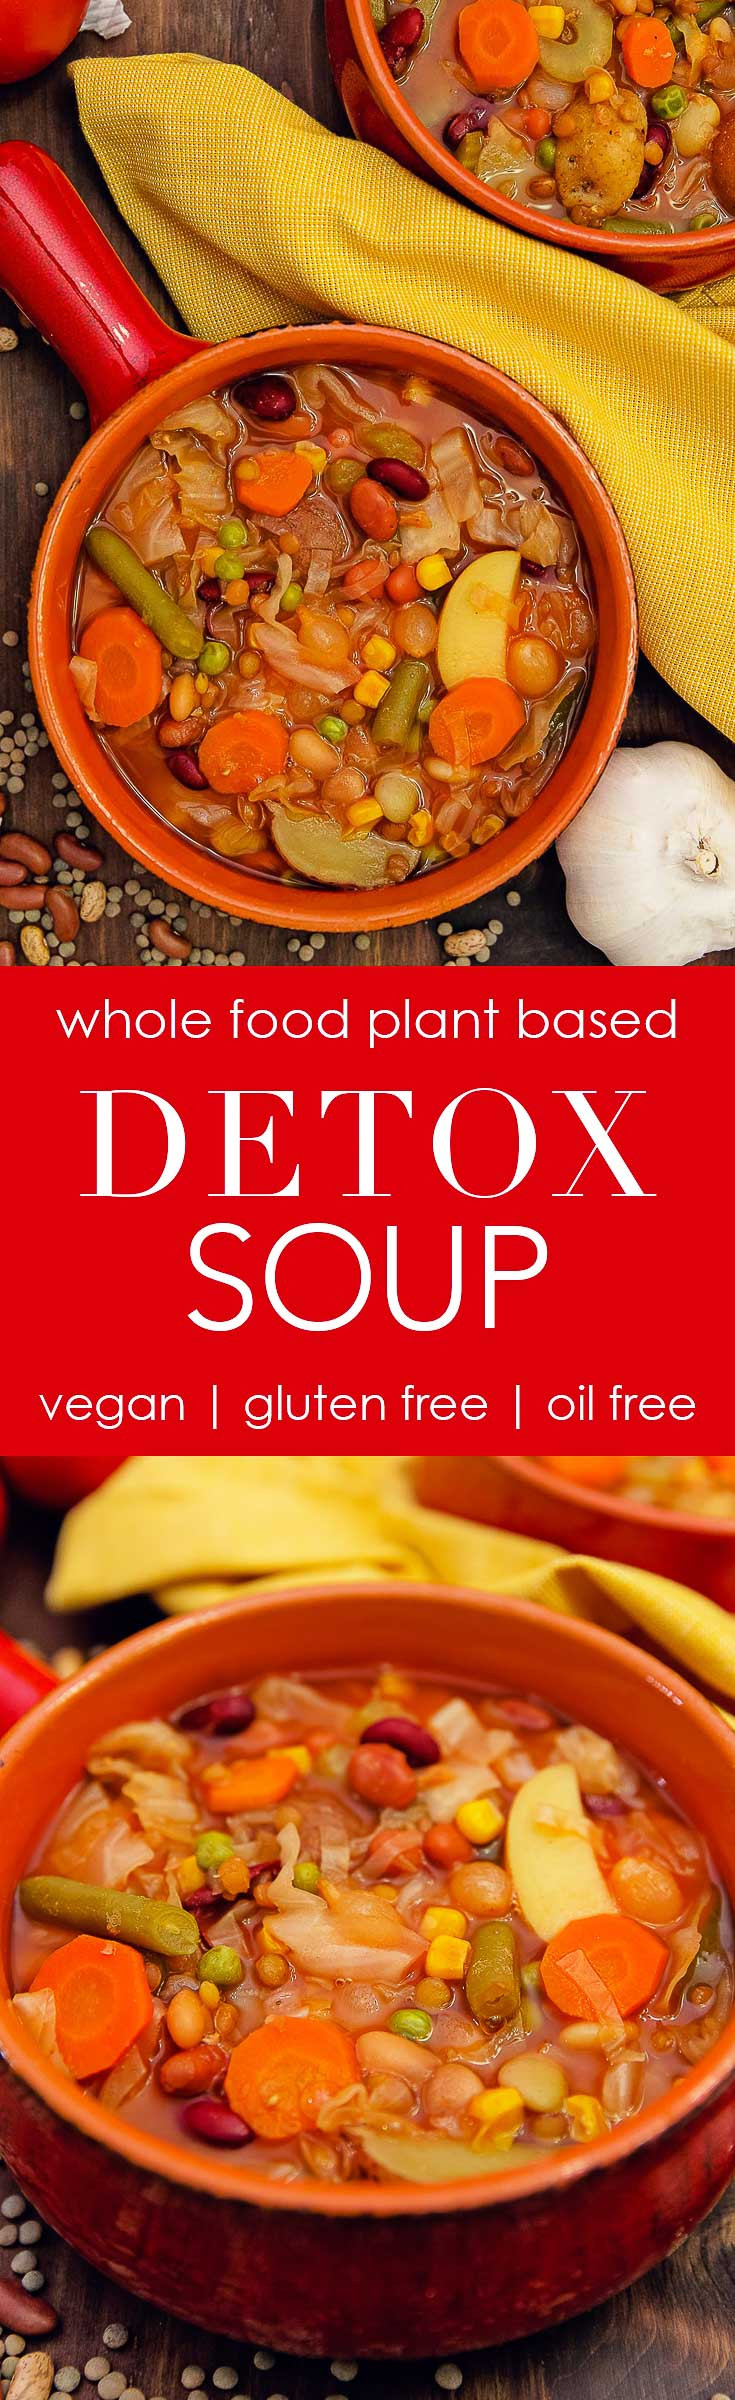 Plant Based Recipes Soup
 Detox Soup Monkey and Me Kitchen Adventures